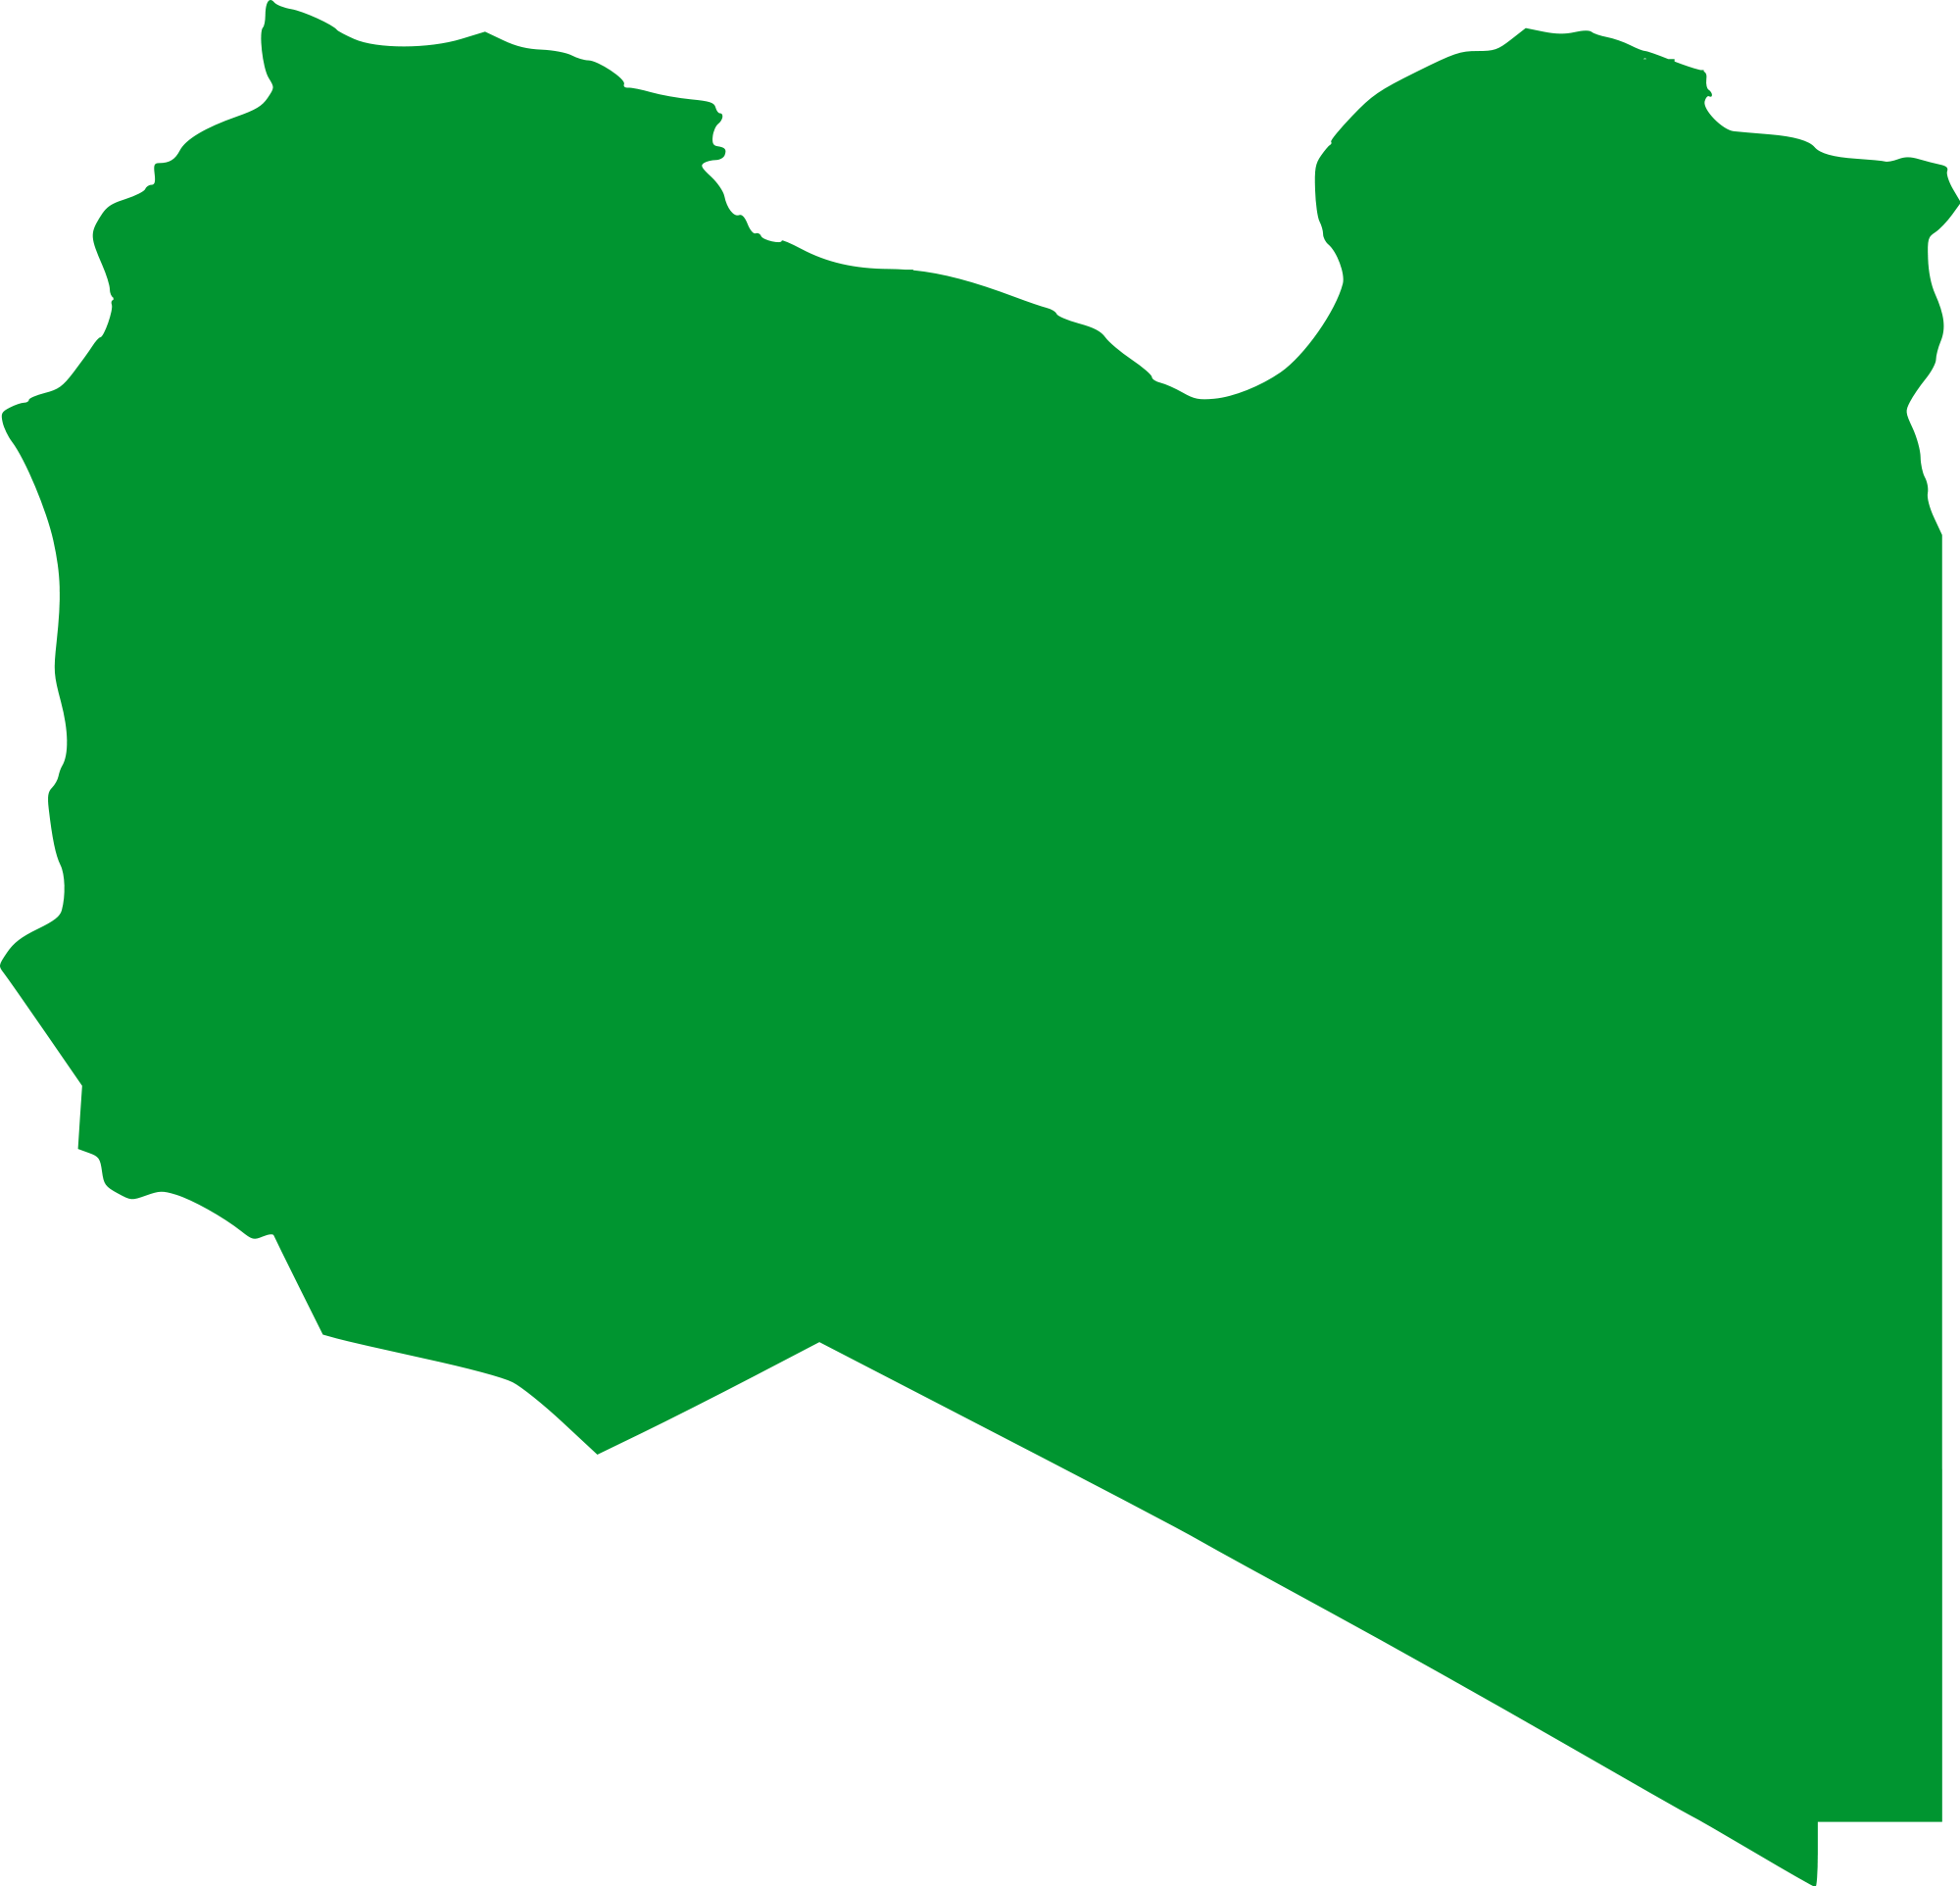 Clipart map community. File flag of libya